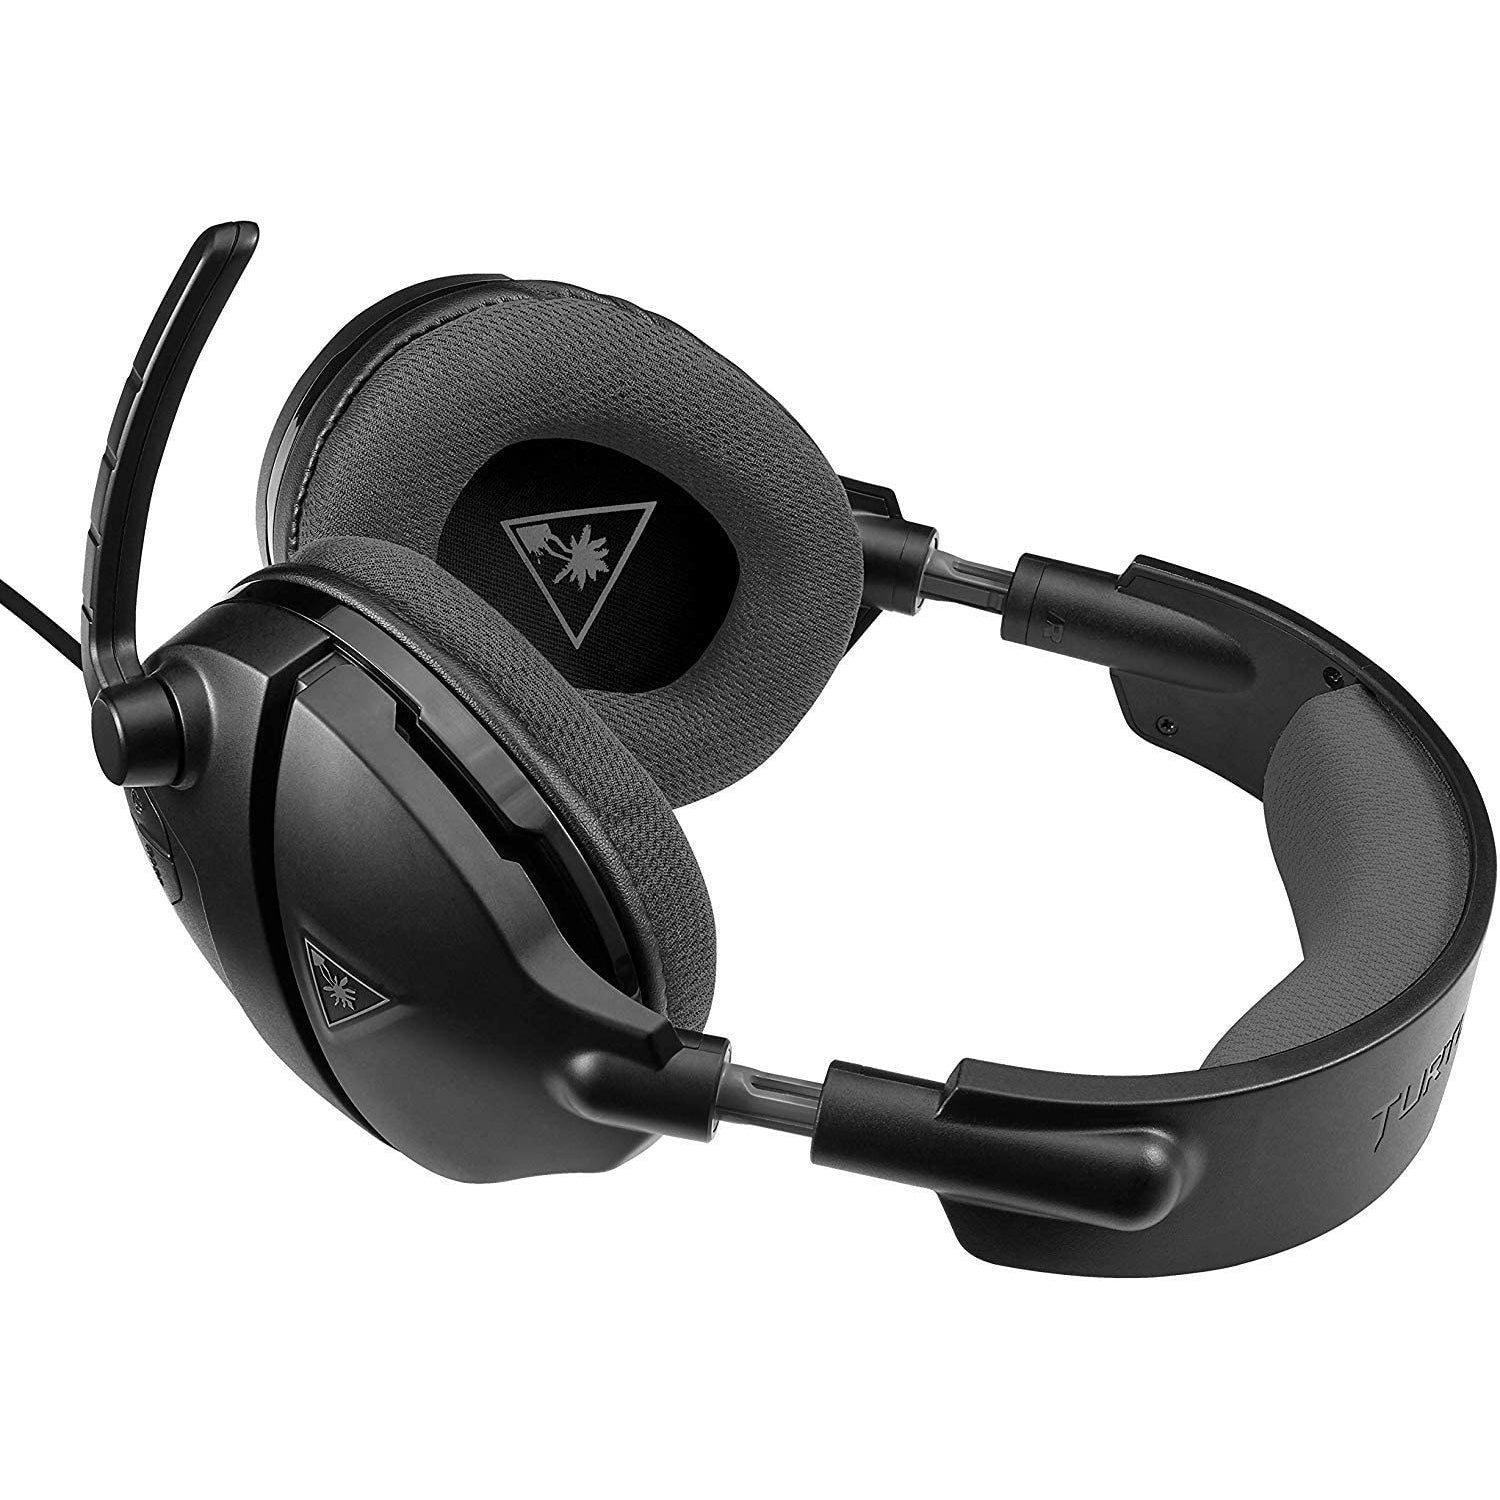 Turtle Beach Atlas Three Amplified Gaming Headset - Black - Refurbished Pristine